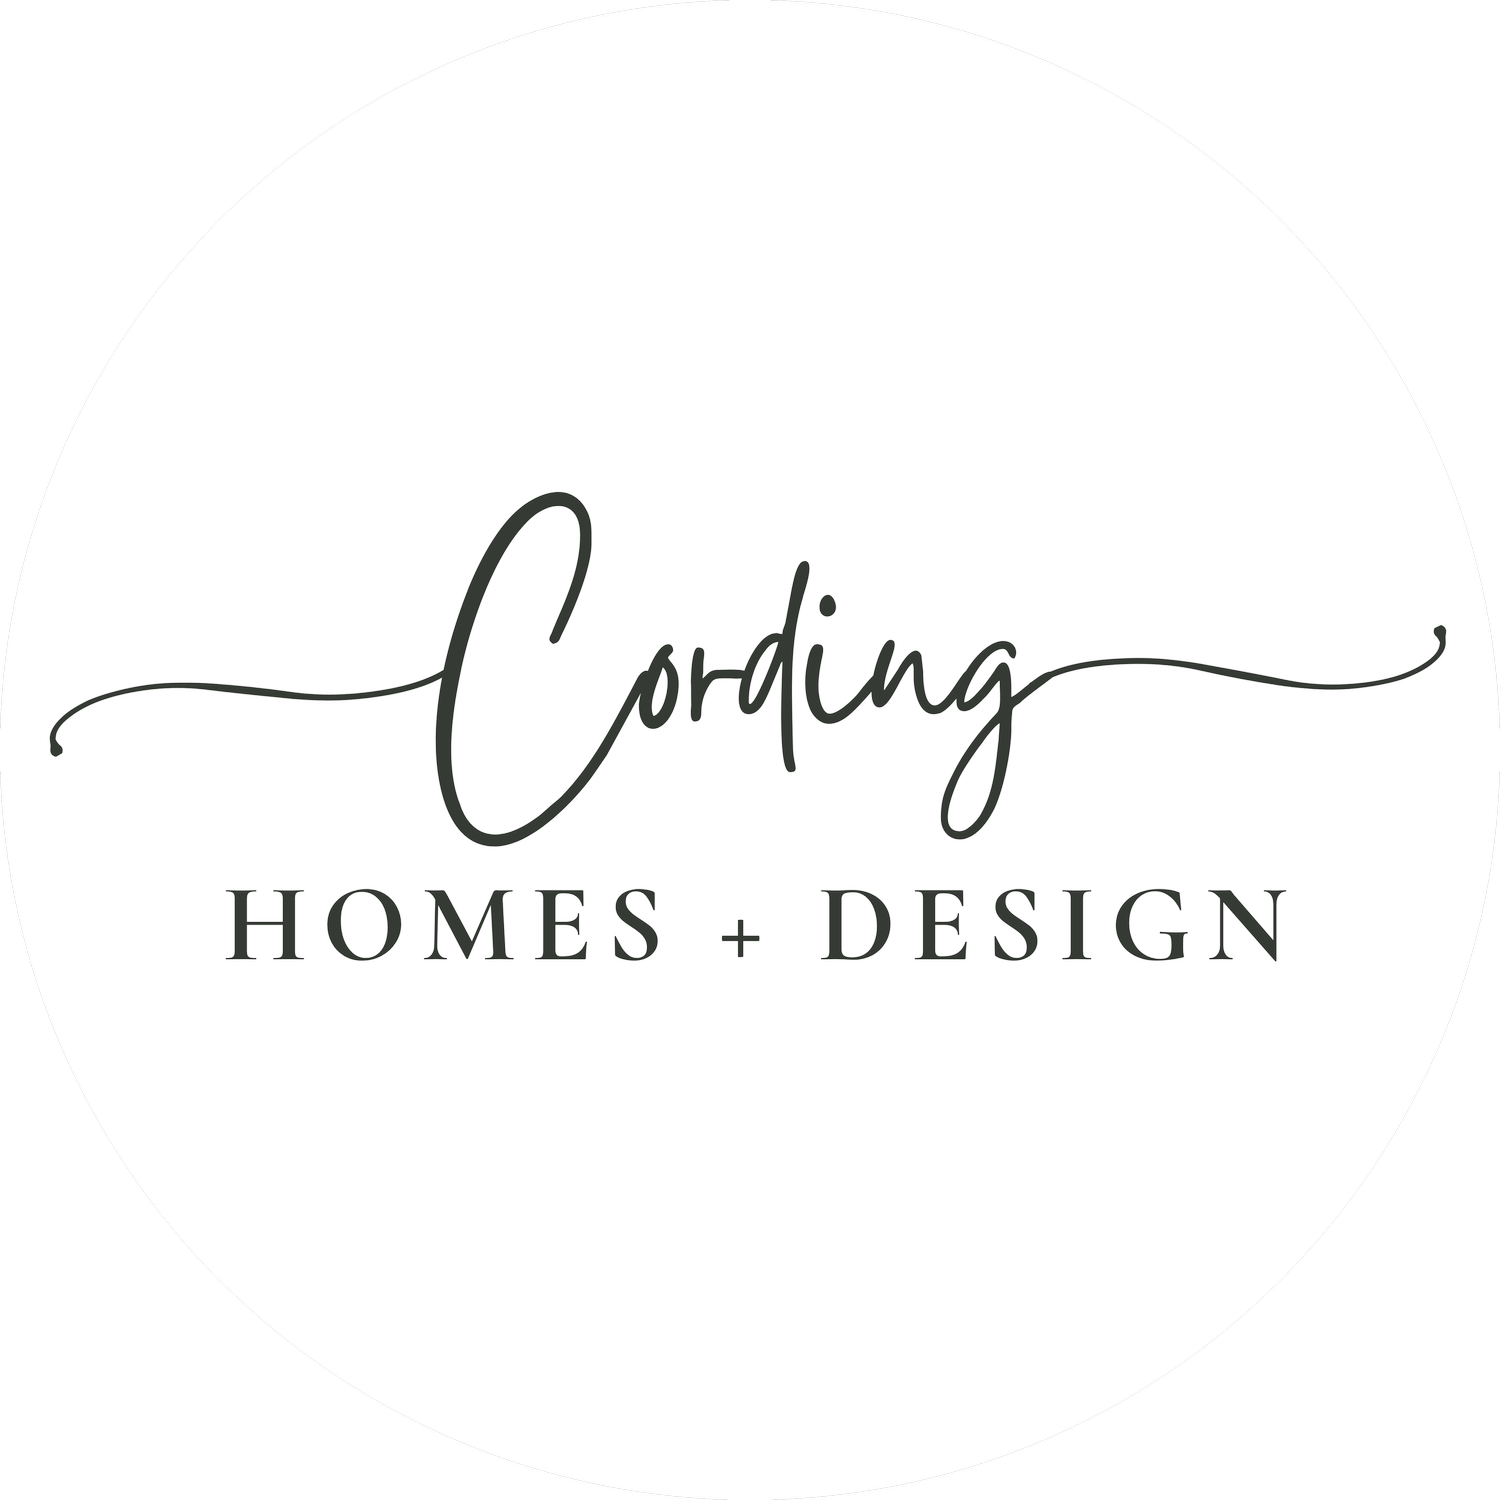 CORDING HOMES + DESIGN